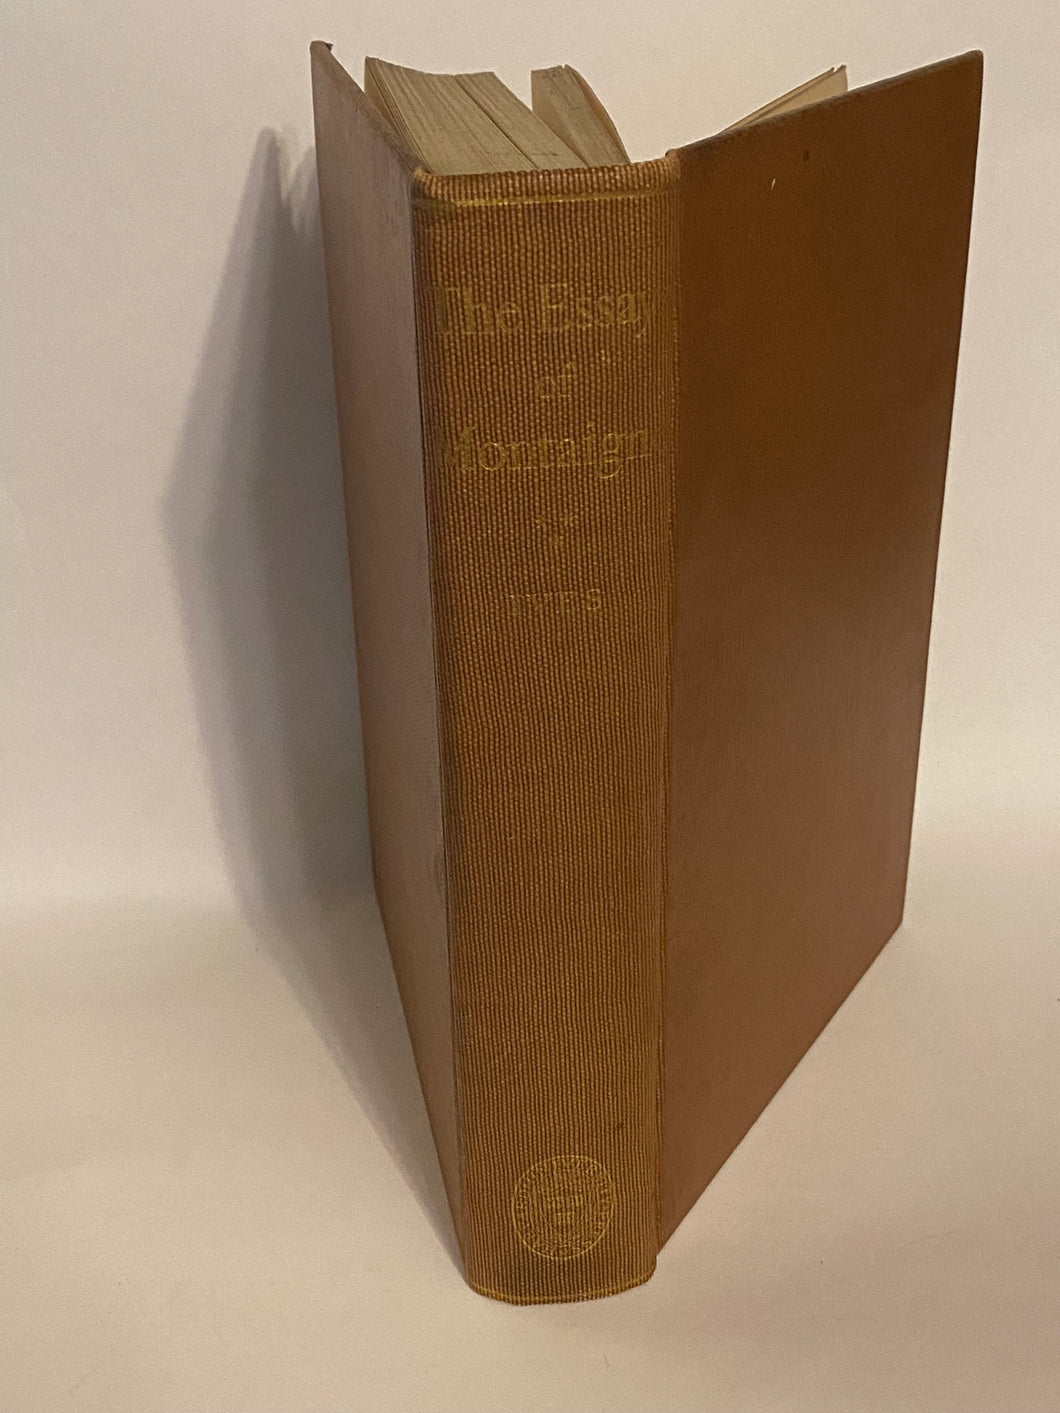 The Essays of Montaigne, Volume 3 - 1925 Edition, Hardcover